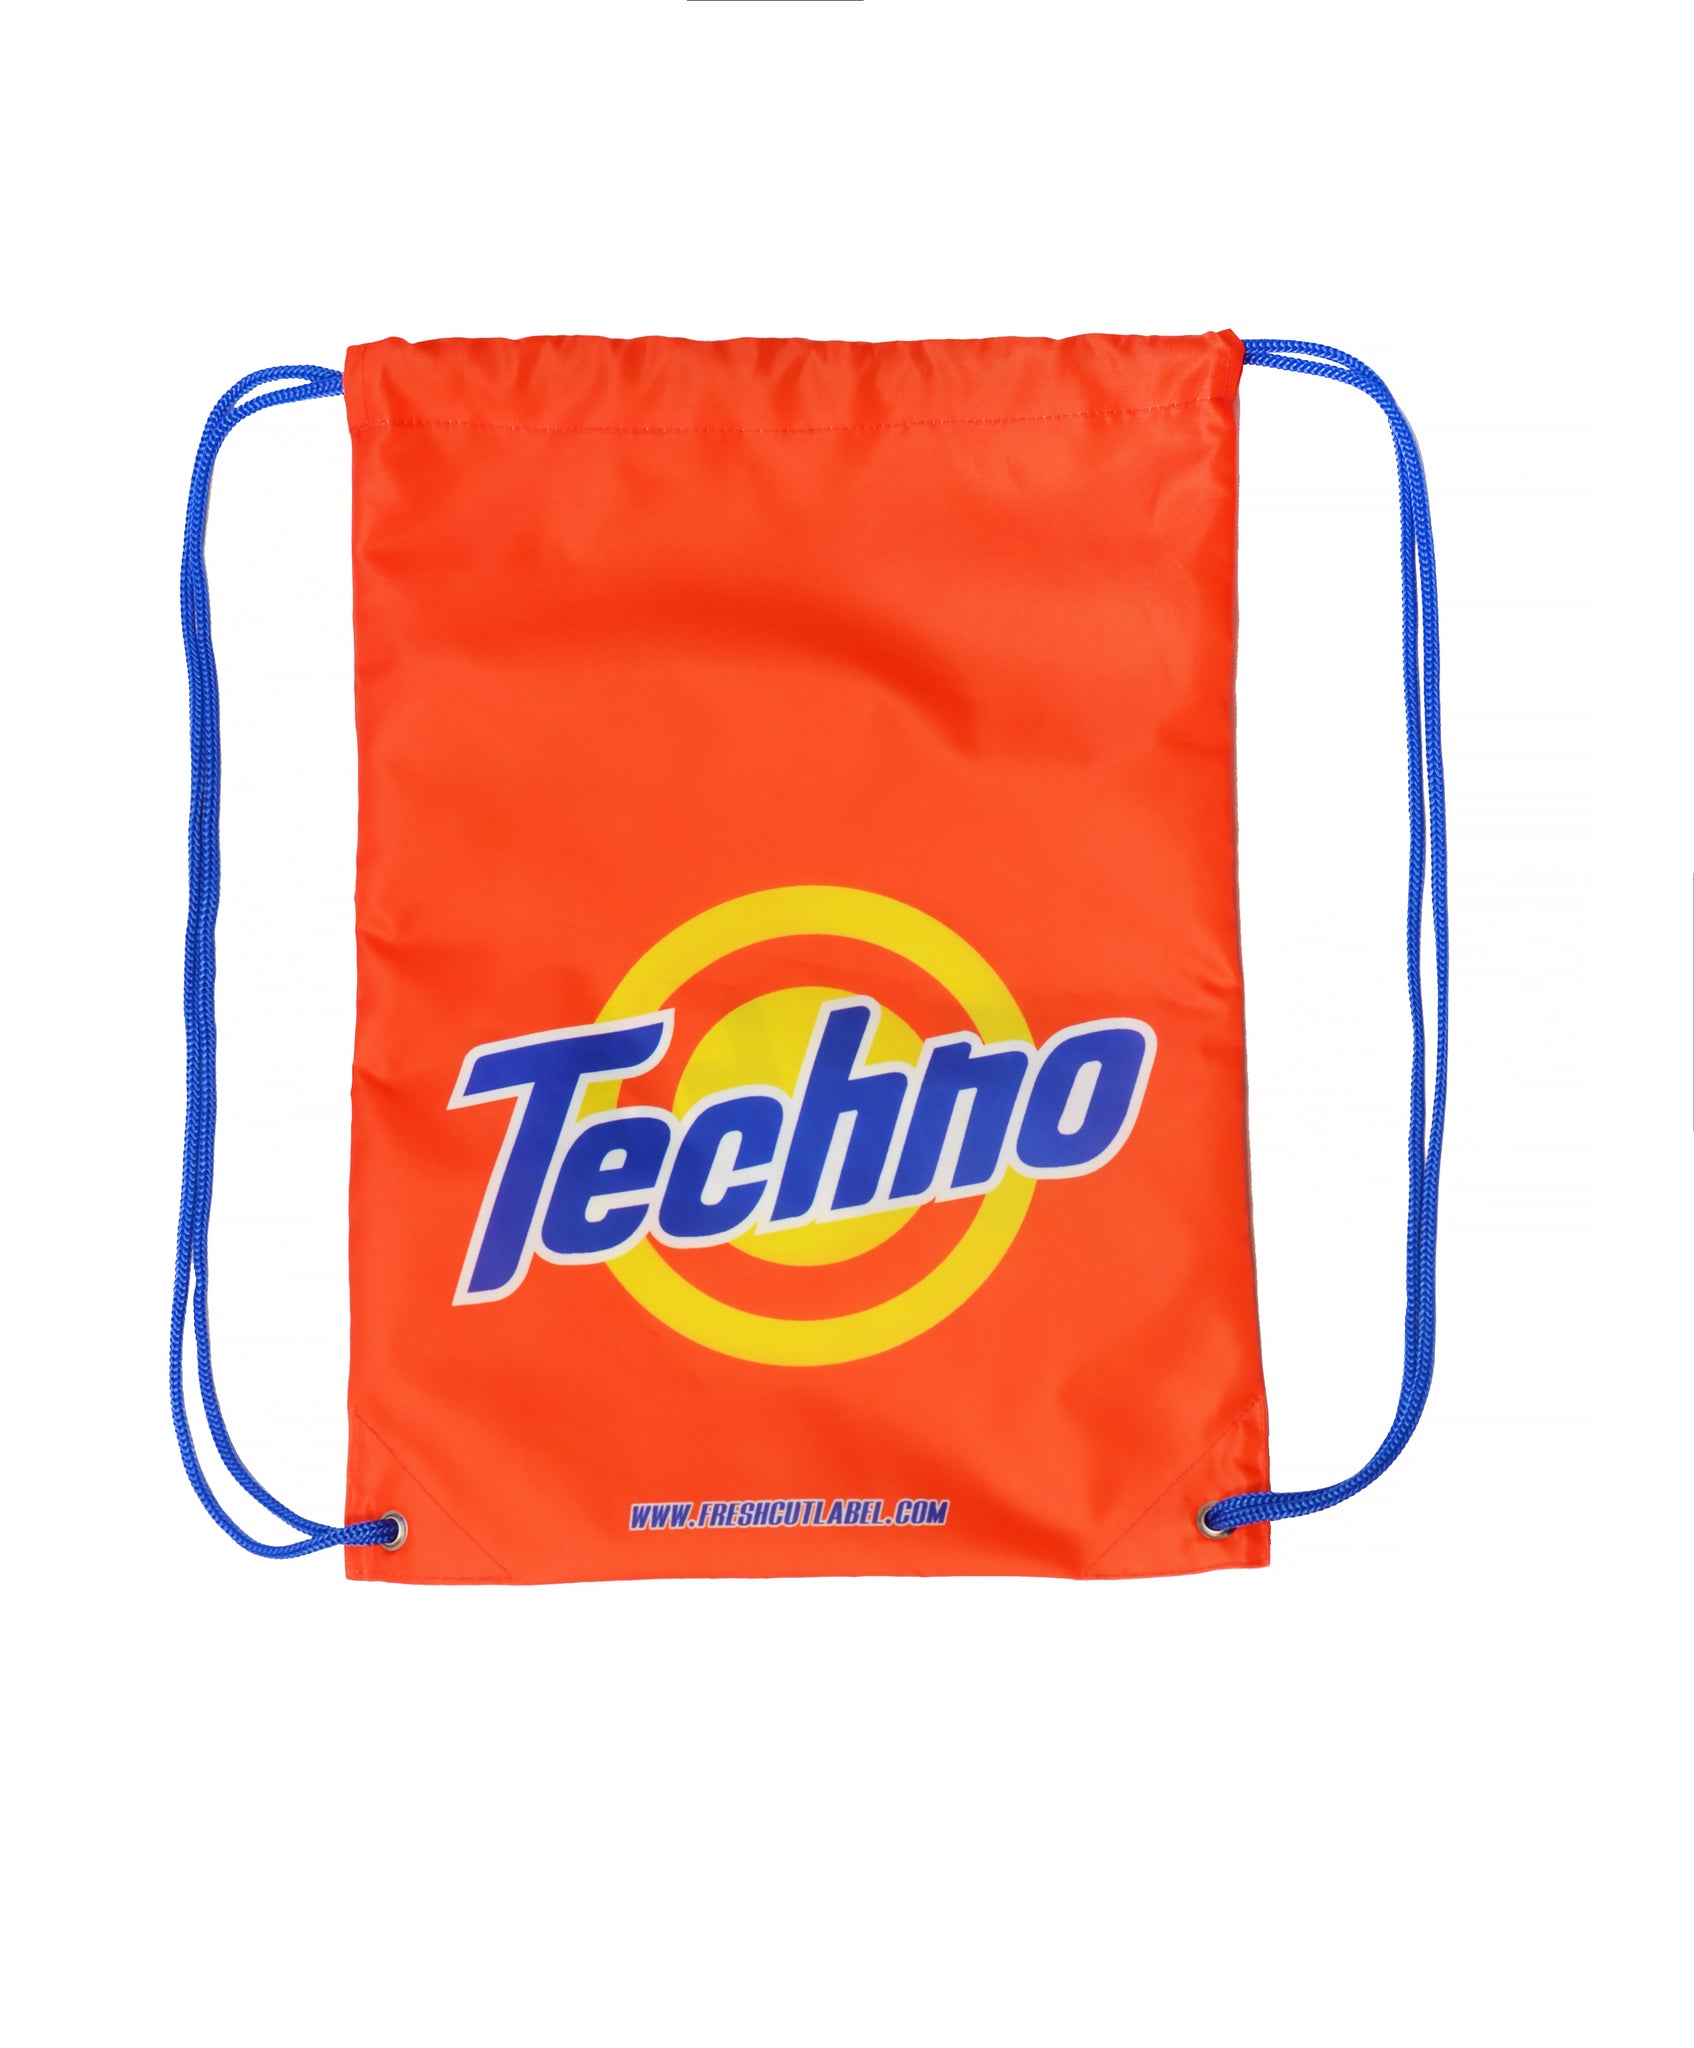 Techno Powder - Backpacks